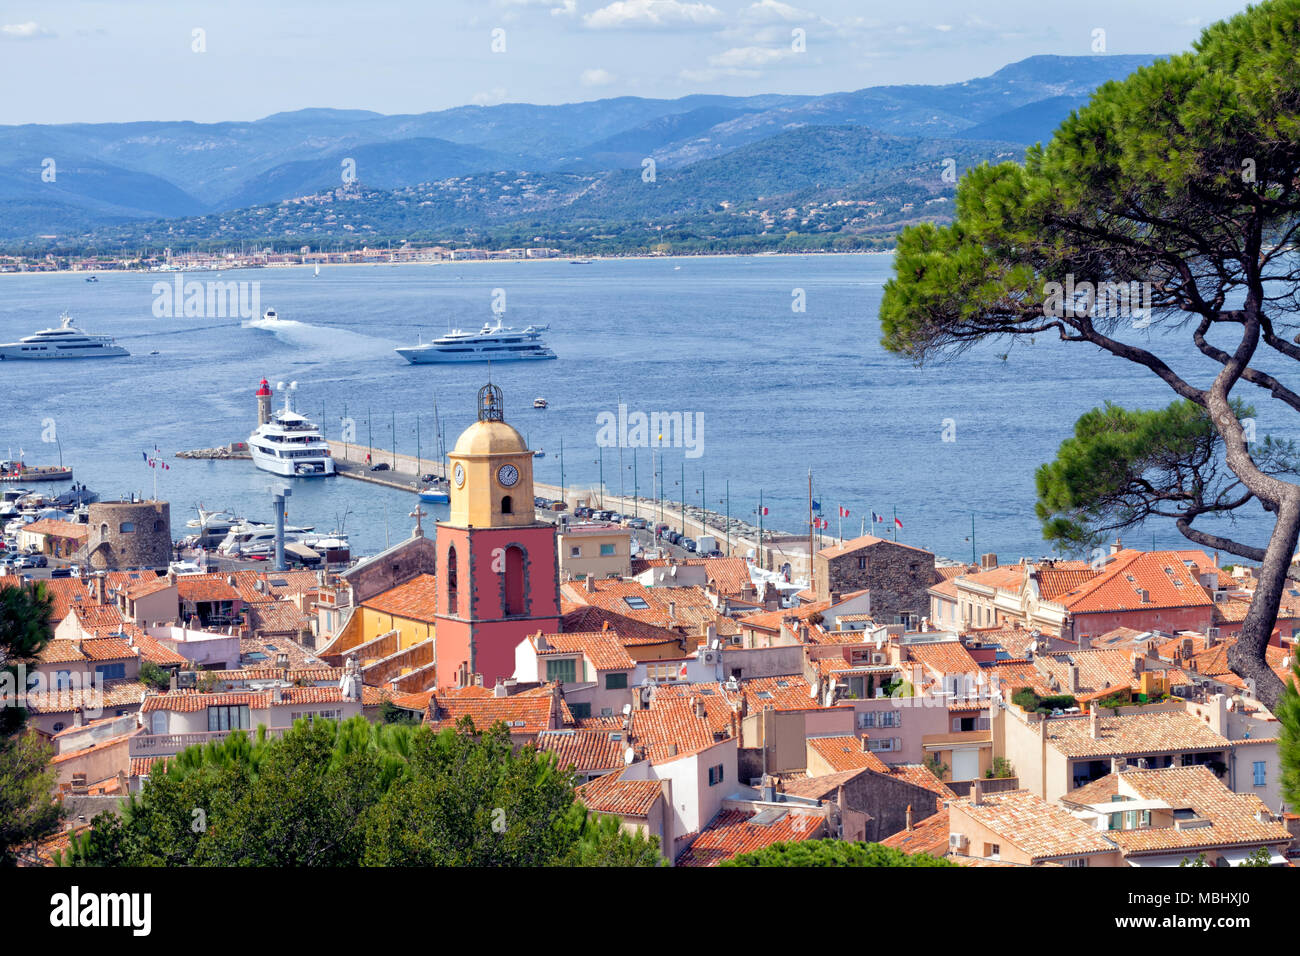 Panoramic view of Saint Tropez, Mediterranean chic fishing village in ...